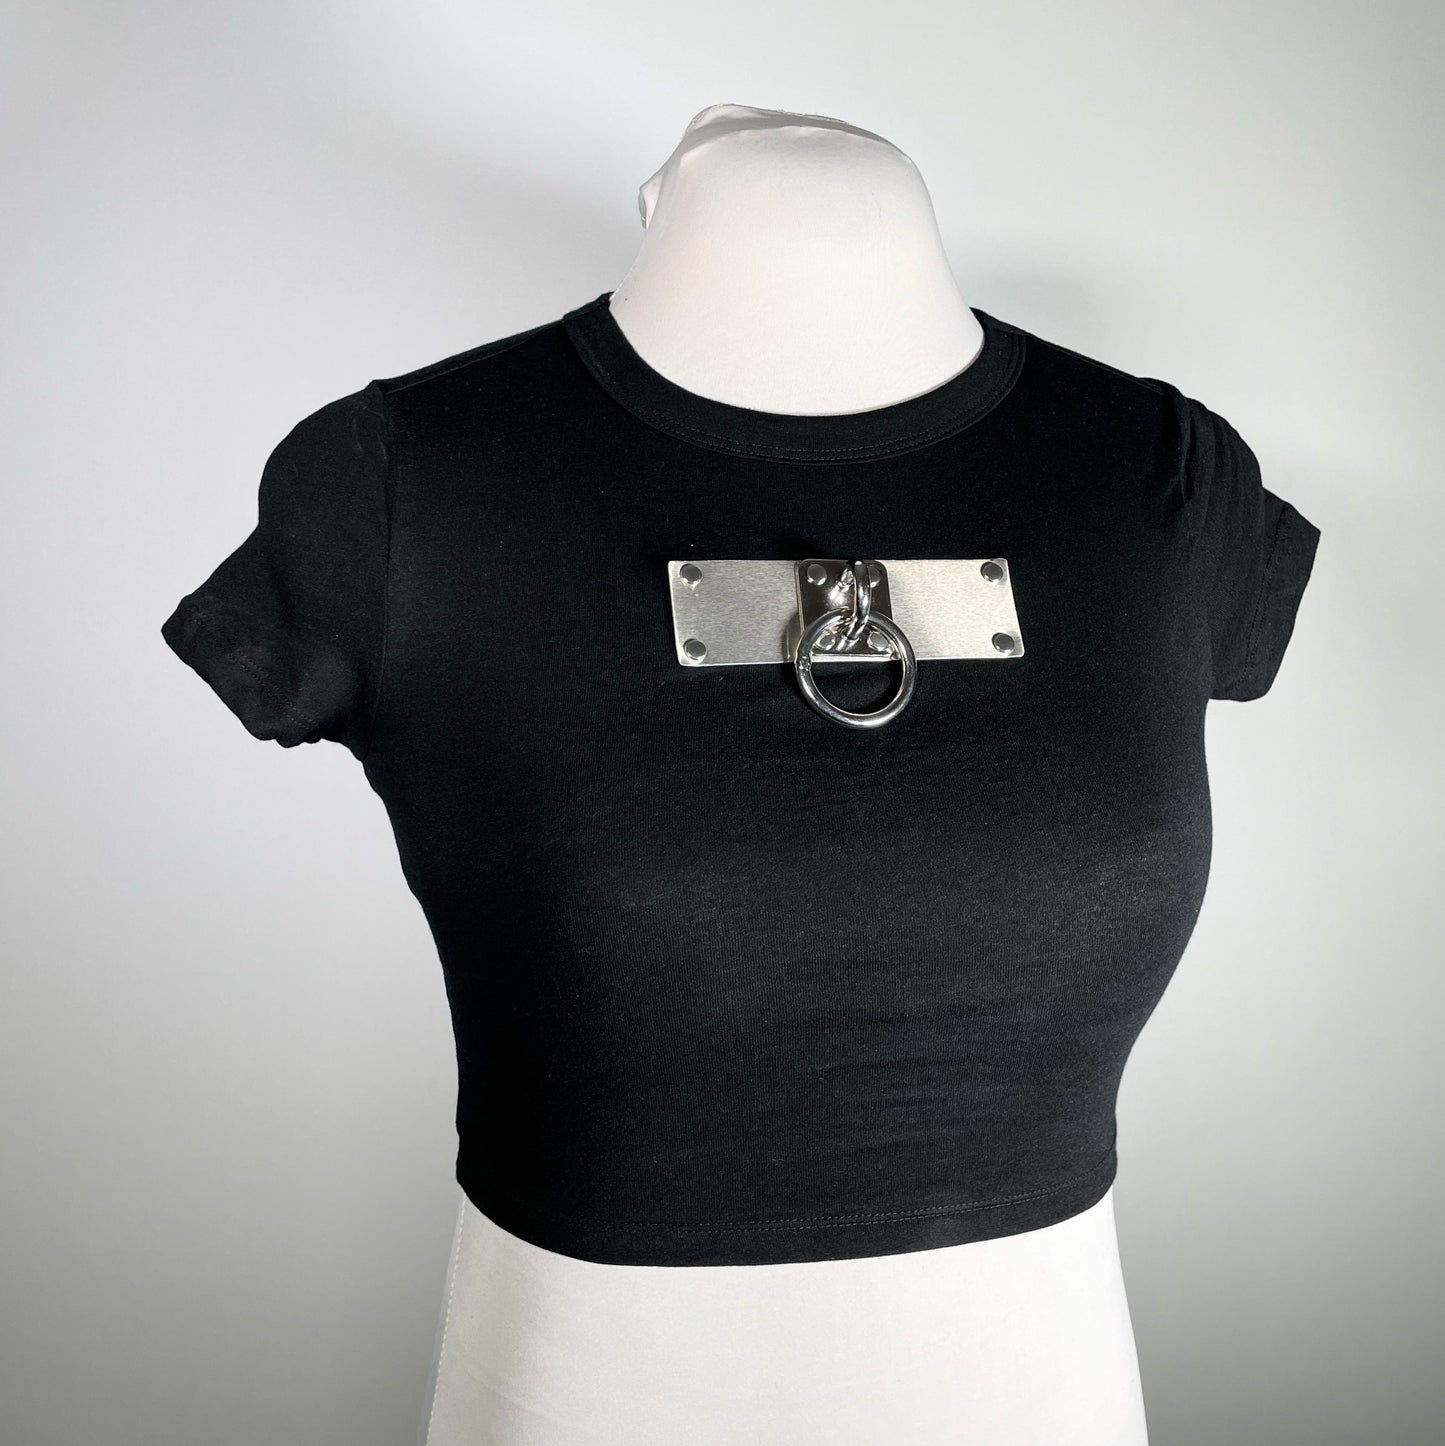 Women's Black Modified T-shirt (Choose your style!)